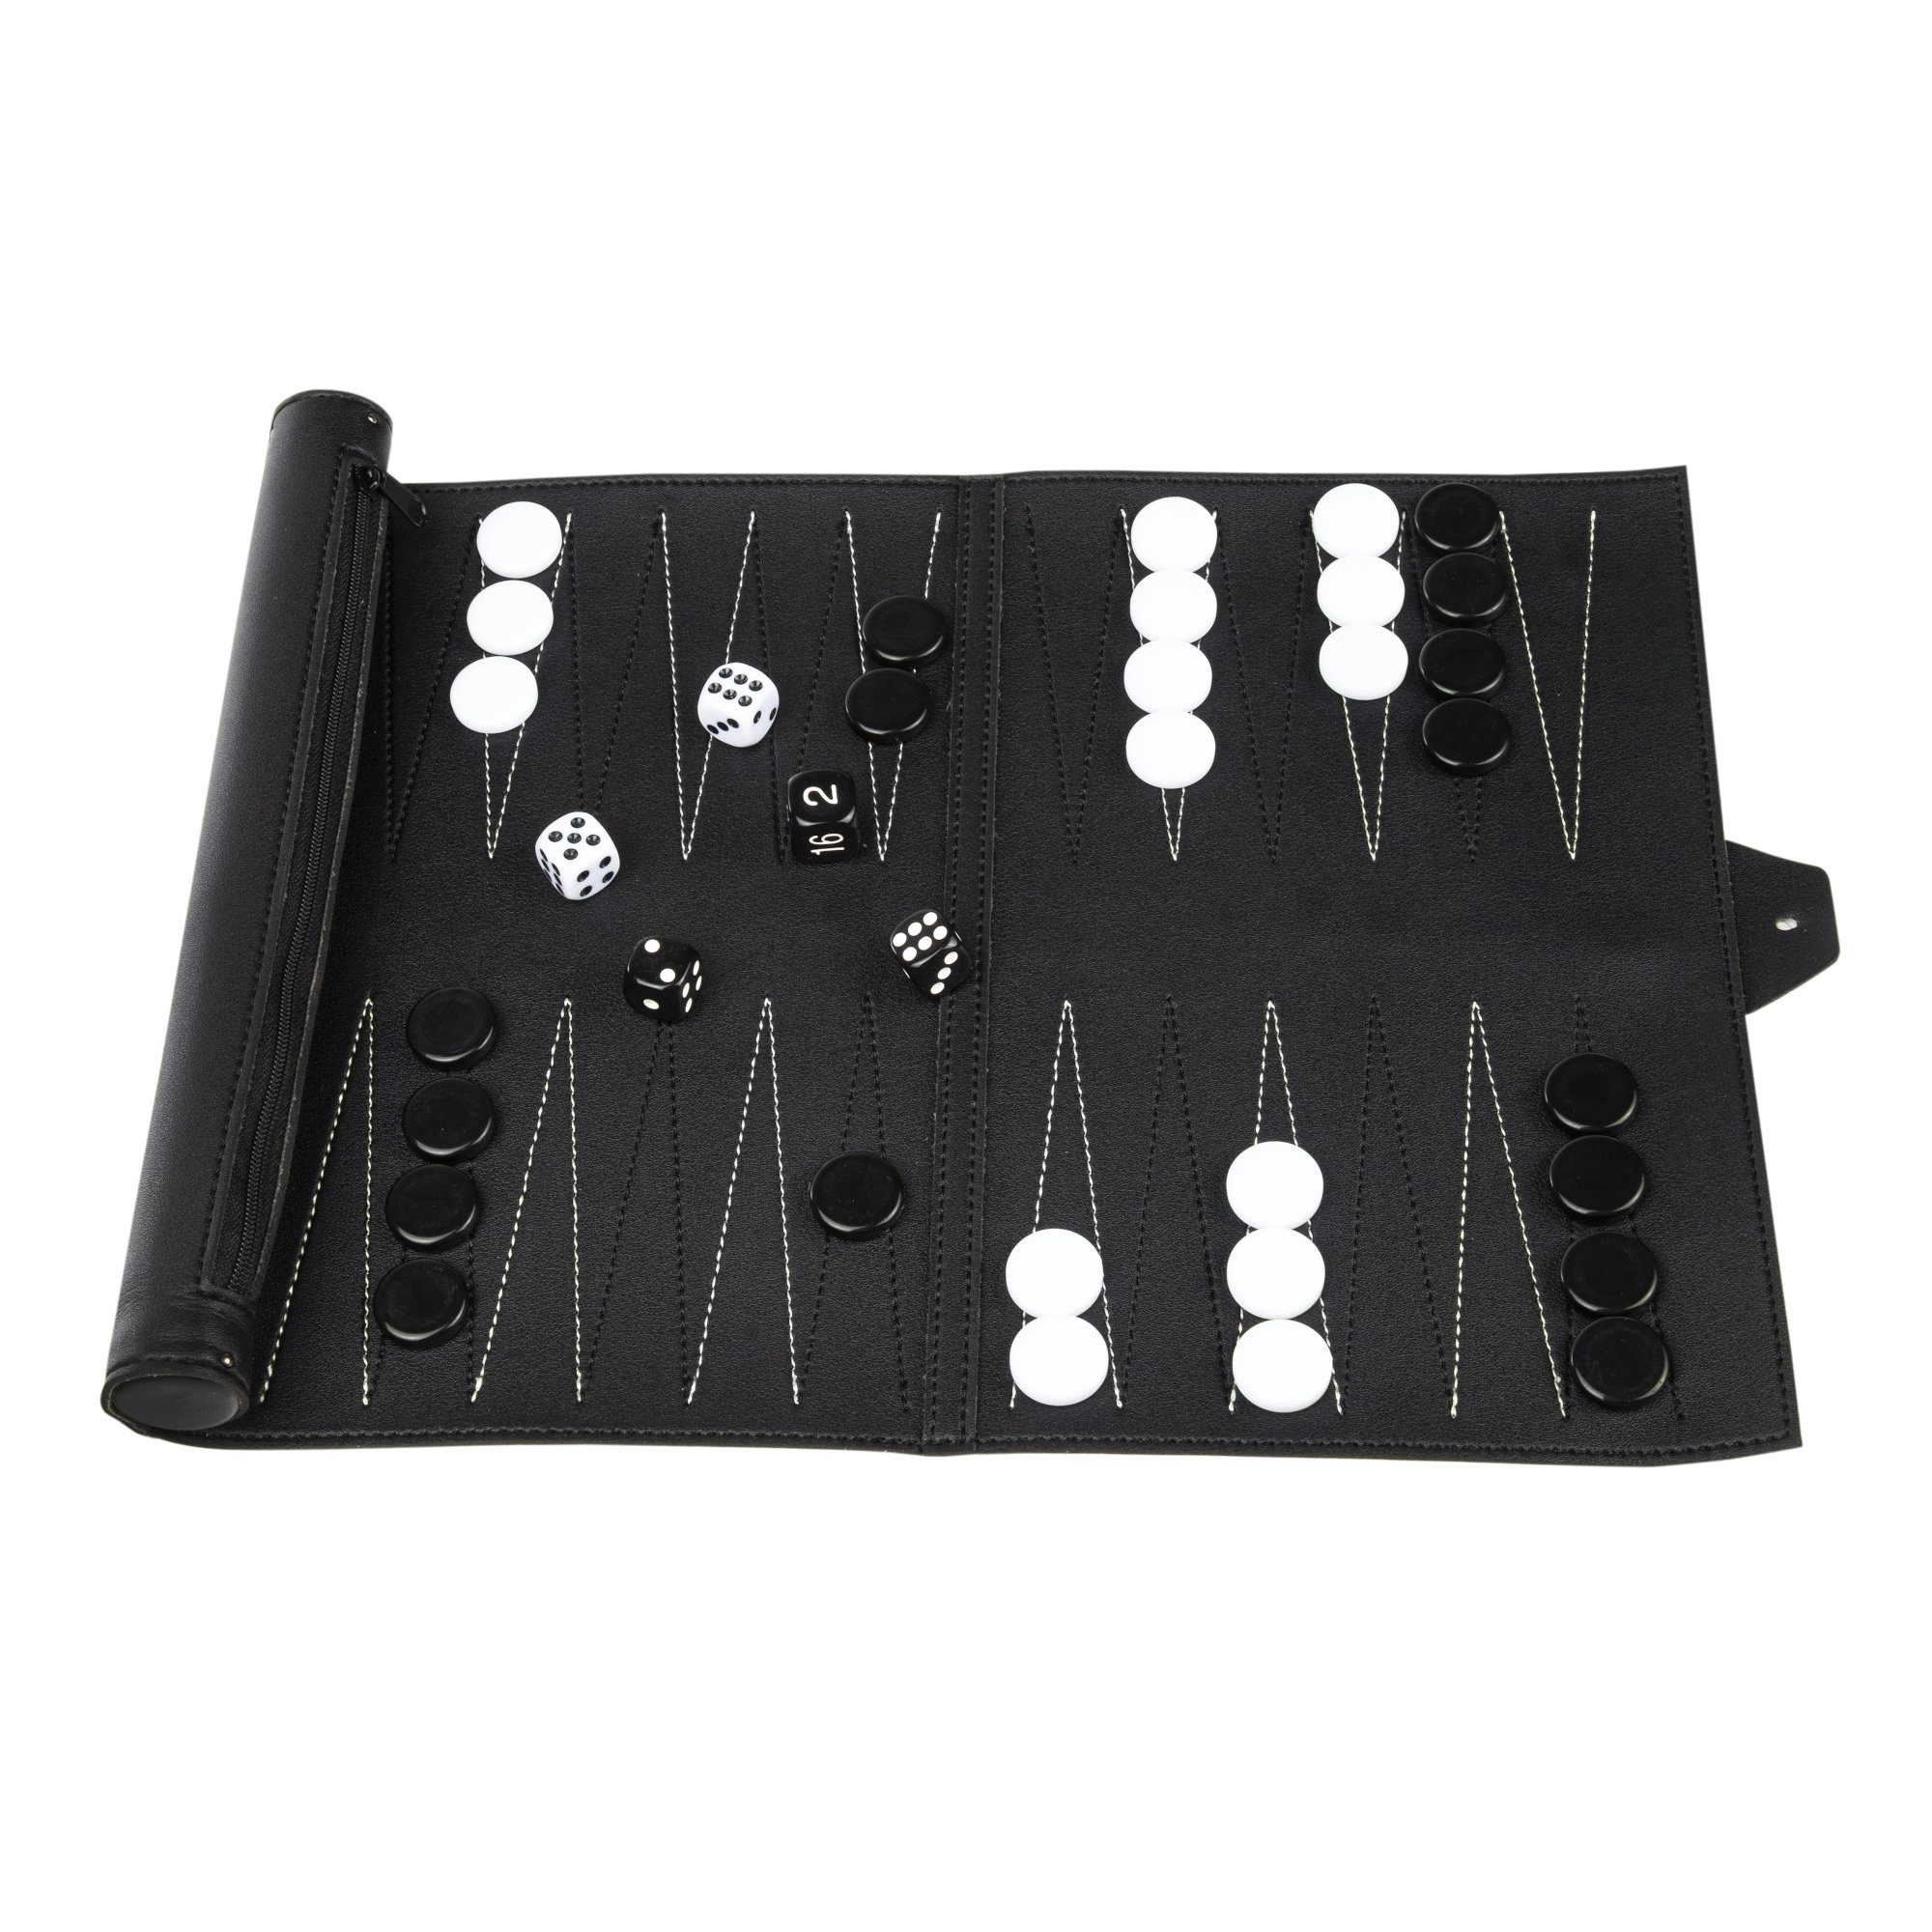 Gravidus Spiel, Backgammon Reise Kompakt Brettspiel Reise-Backgammon Reisespiel | Spiele